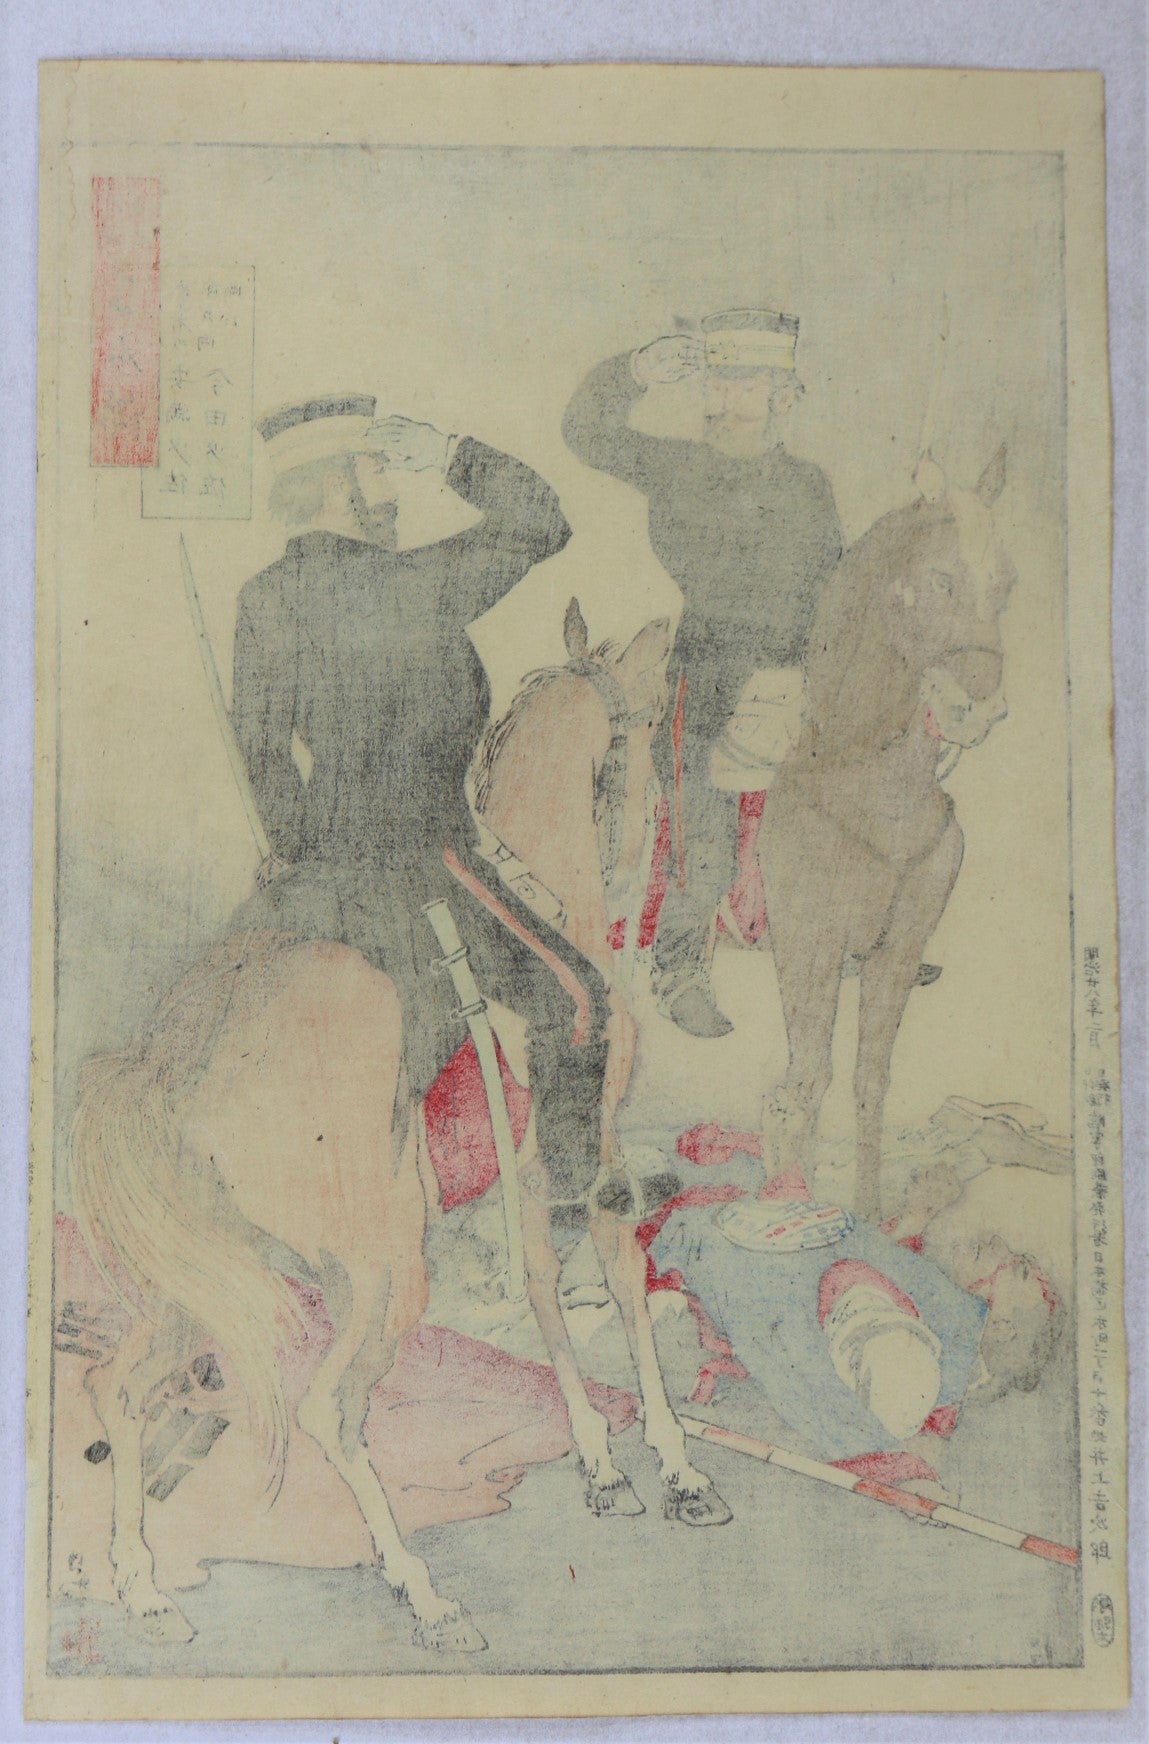 Majors Imada and Yasumitsu from the Series " Mirror of Army and Navy Heroes " by Kiyochika / Les Majors Imada et Yasumitsu de la série " Miroir des Héros de l'Armée de Terre et de la Marine "par Kiyochika (1895)